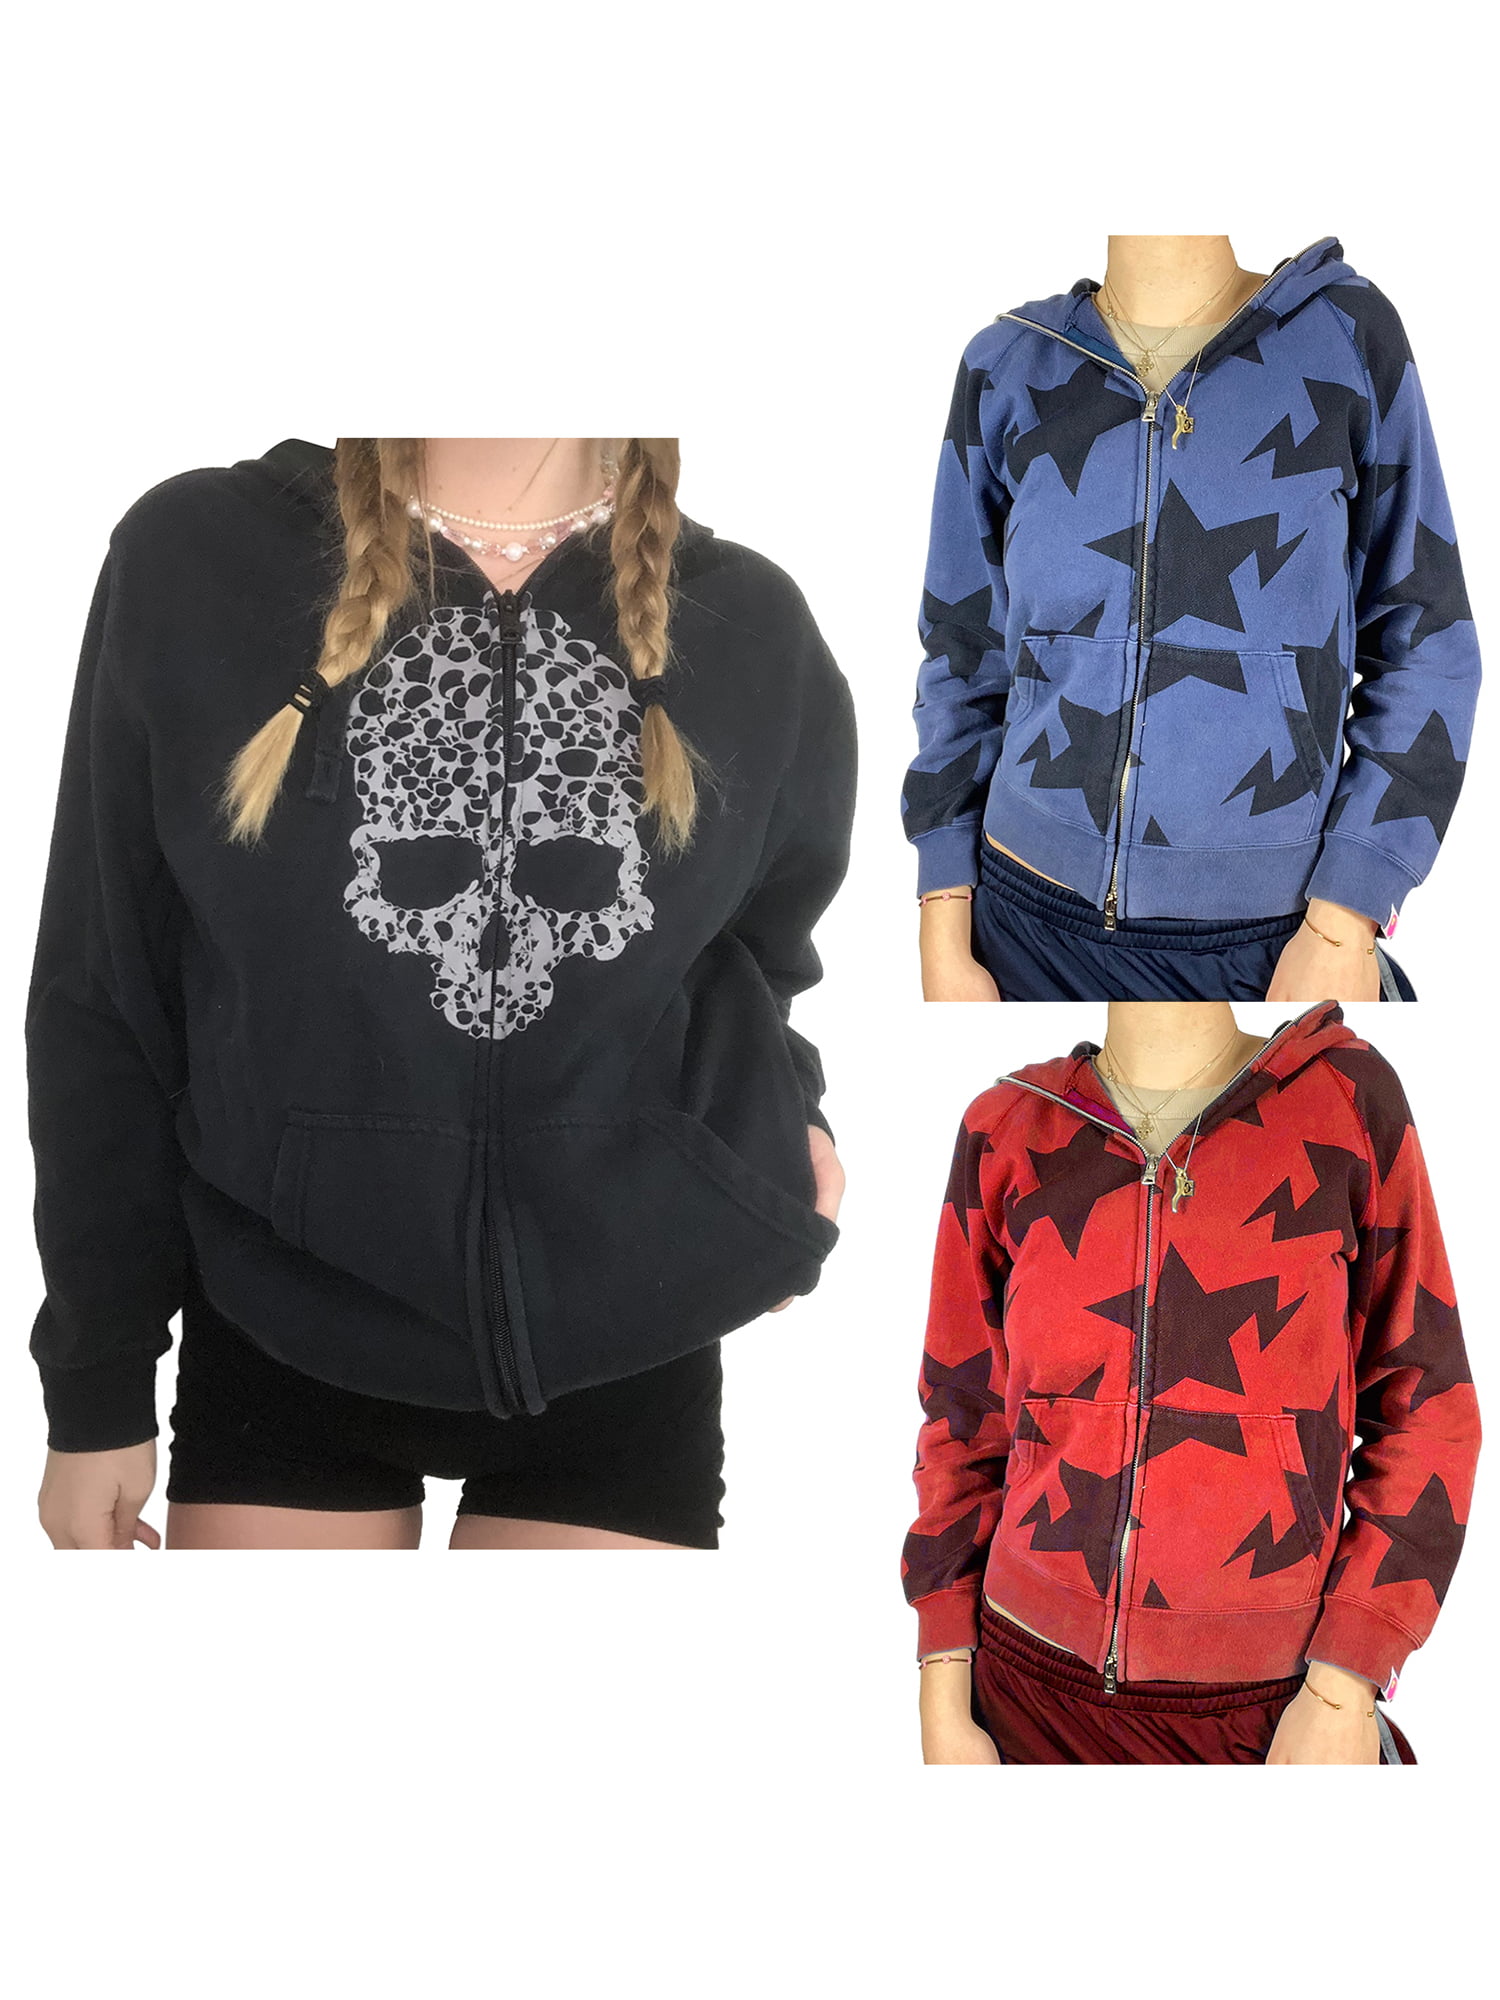 Multitrust Women's Zip Up Hoodie Long Sleeve Skull/Star Print Sweatshirt